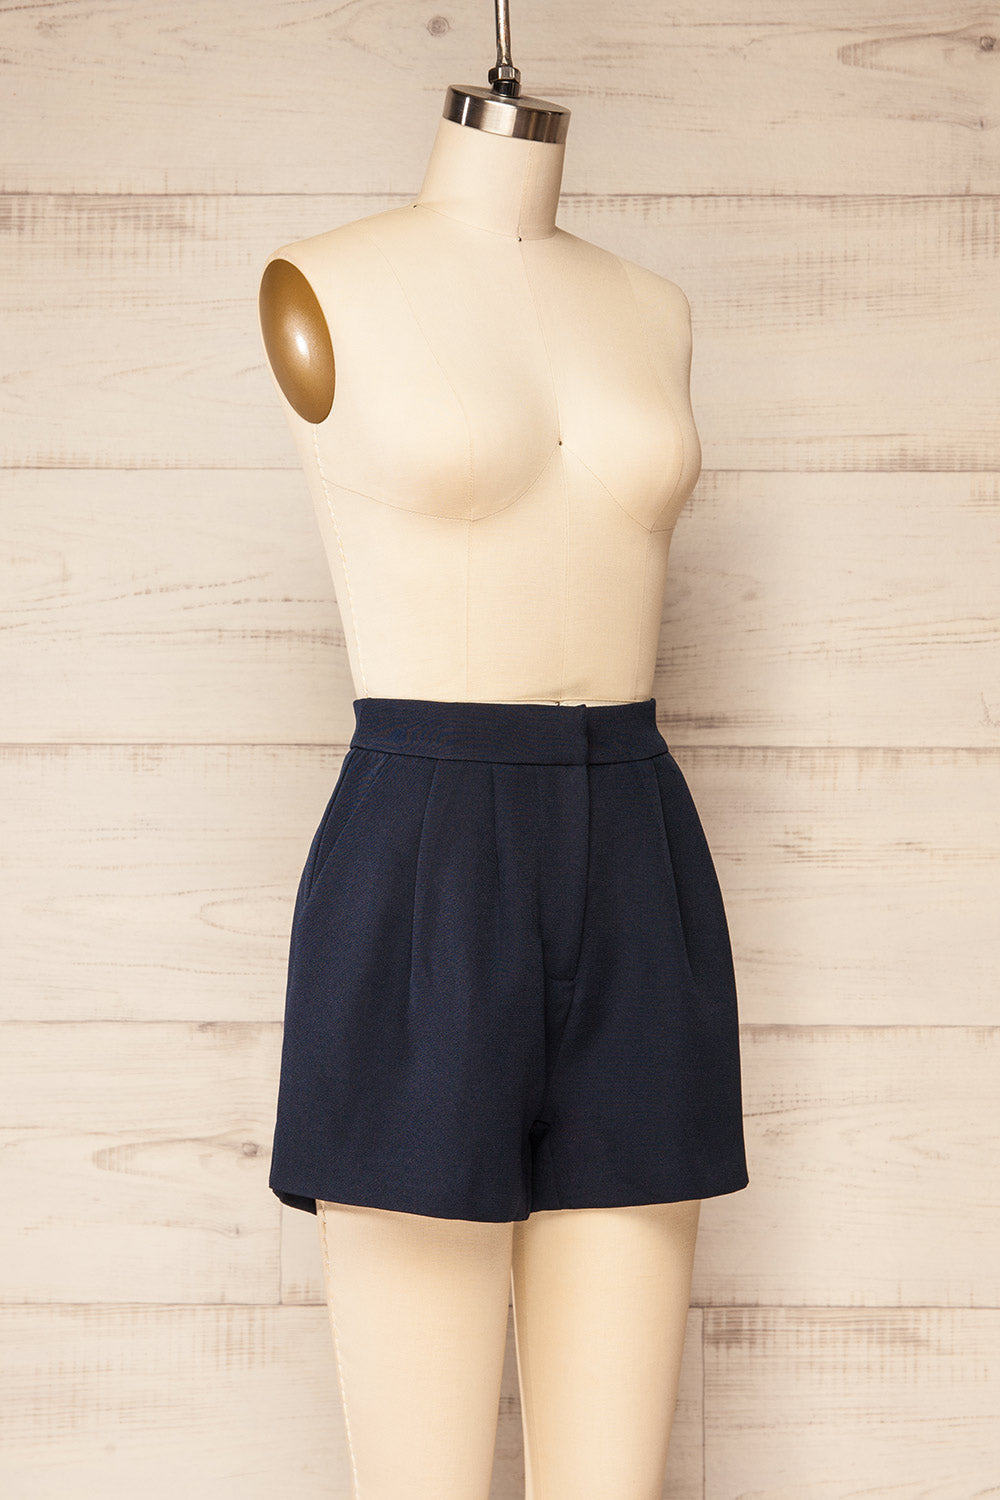 Lonsdale Navy High-Waisted Shorts w/ Pockets | La petite garçonne side view